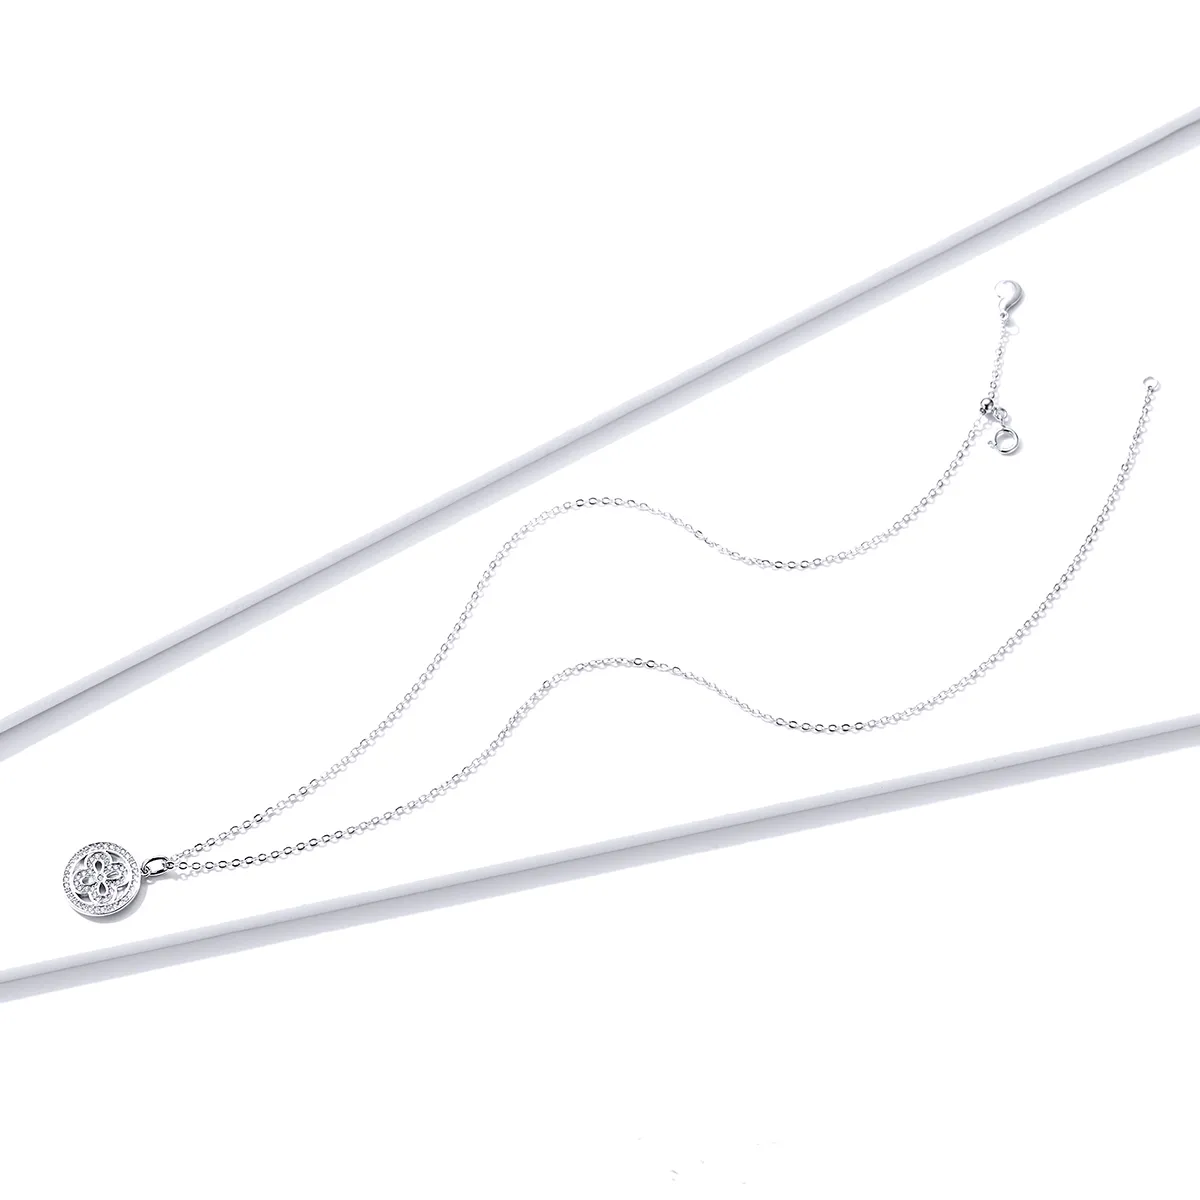 Pandora Style Four Leaf Clover Necklace - BSN142